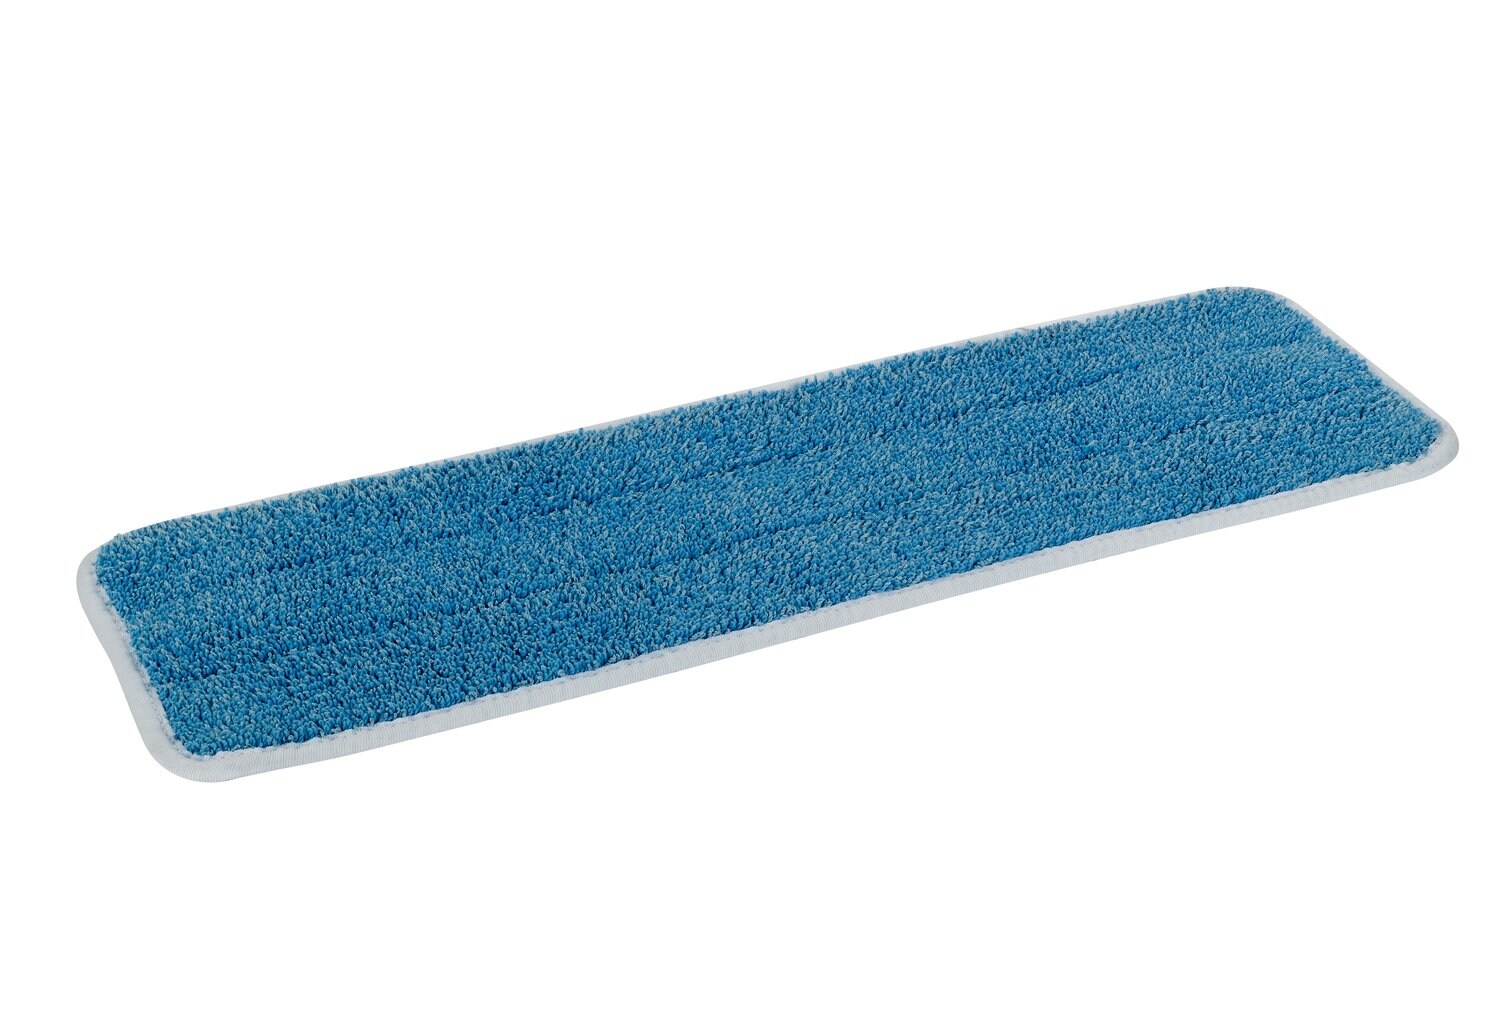 7100135690 - Scotchgard Floor Protector Applicator Pad, Blue, 18 in, 2/Bag, 5
Bags/Case